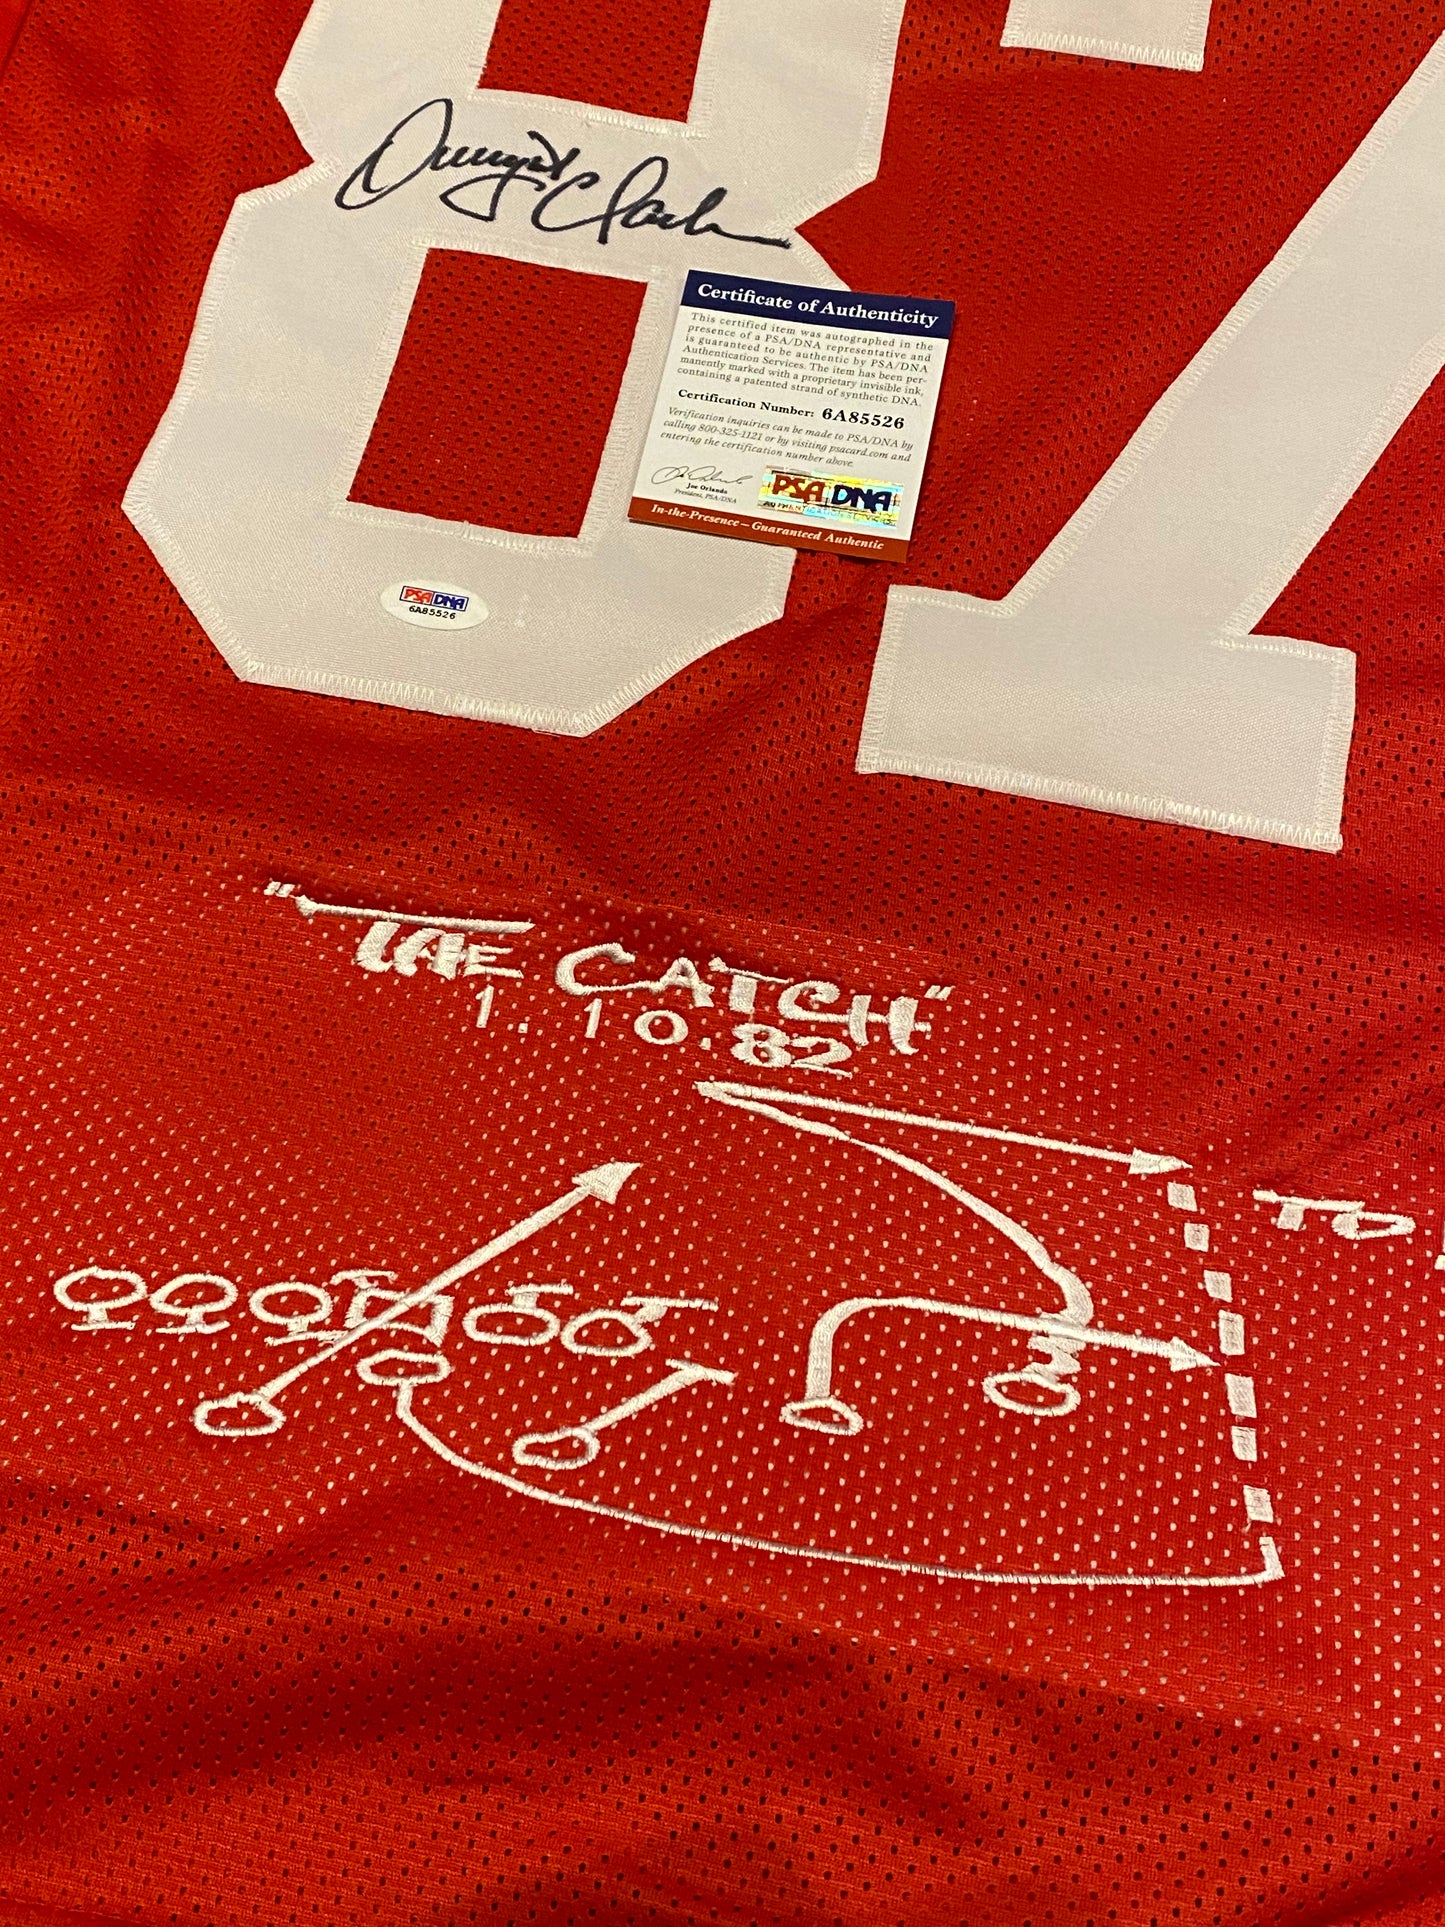 Dwight Clark signed custom jersey "The Catch" (PSA COA)